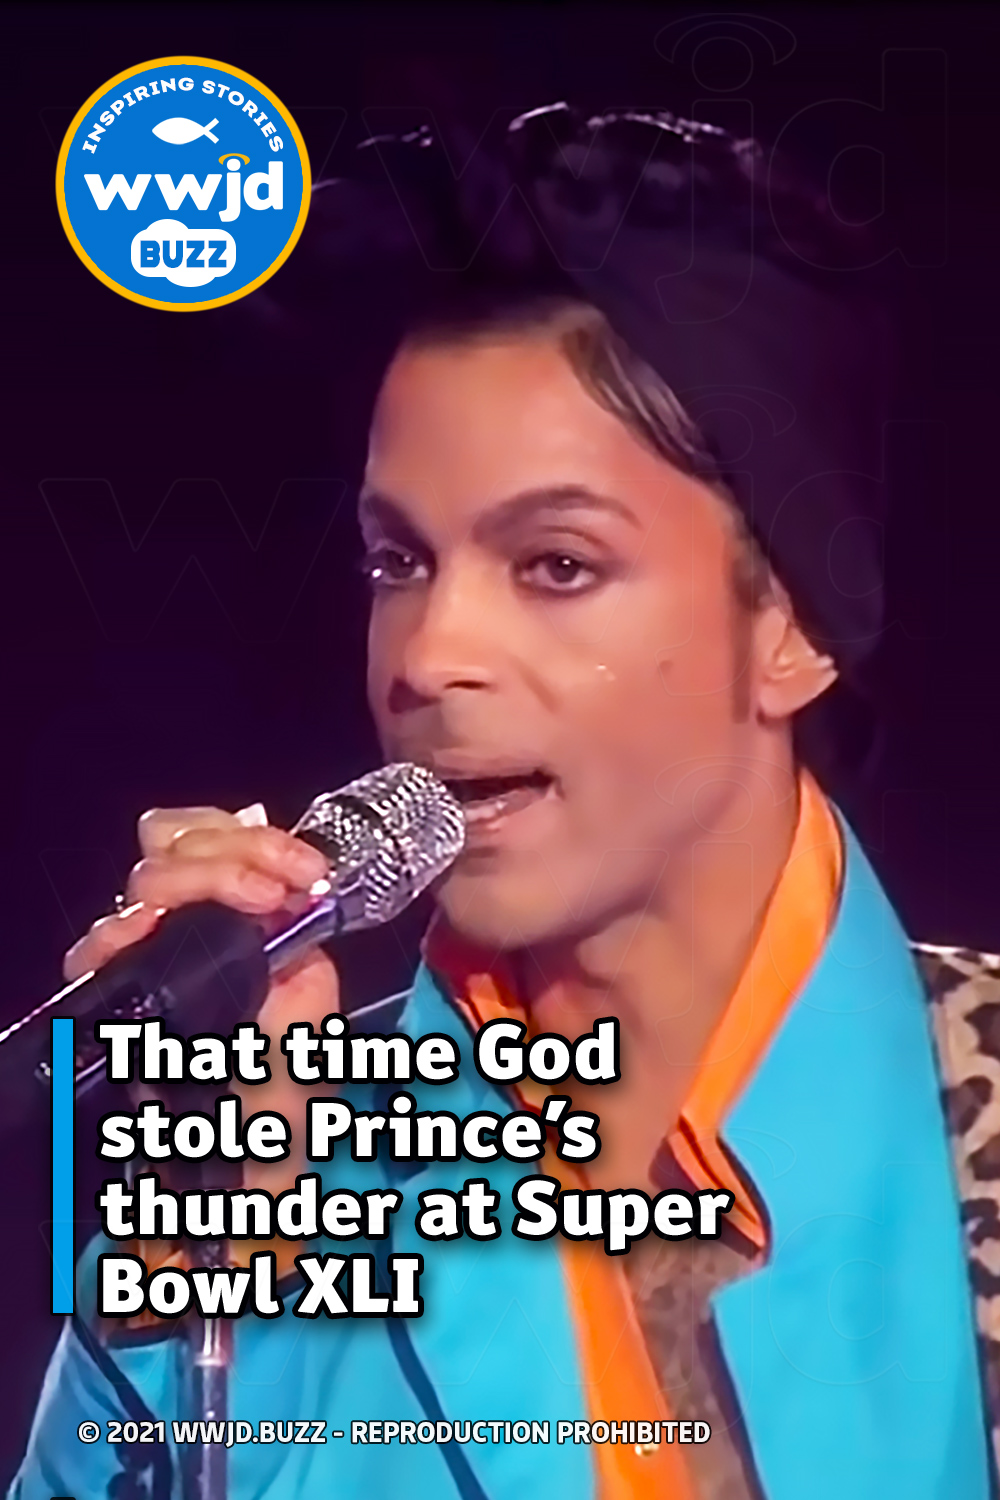 That time God stole Prince’s thunder at Super Bowl XLI